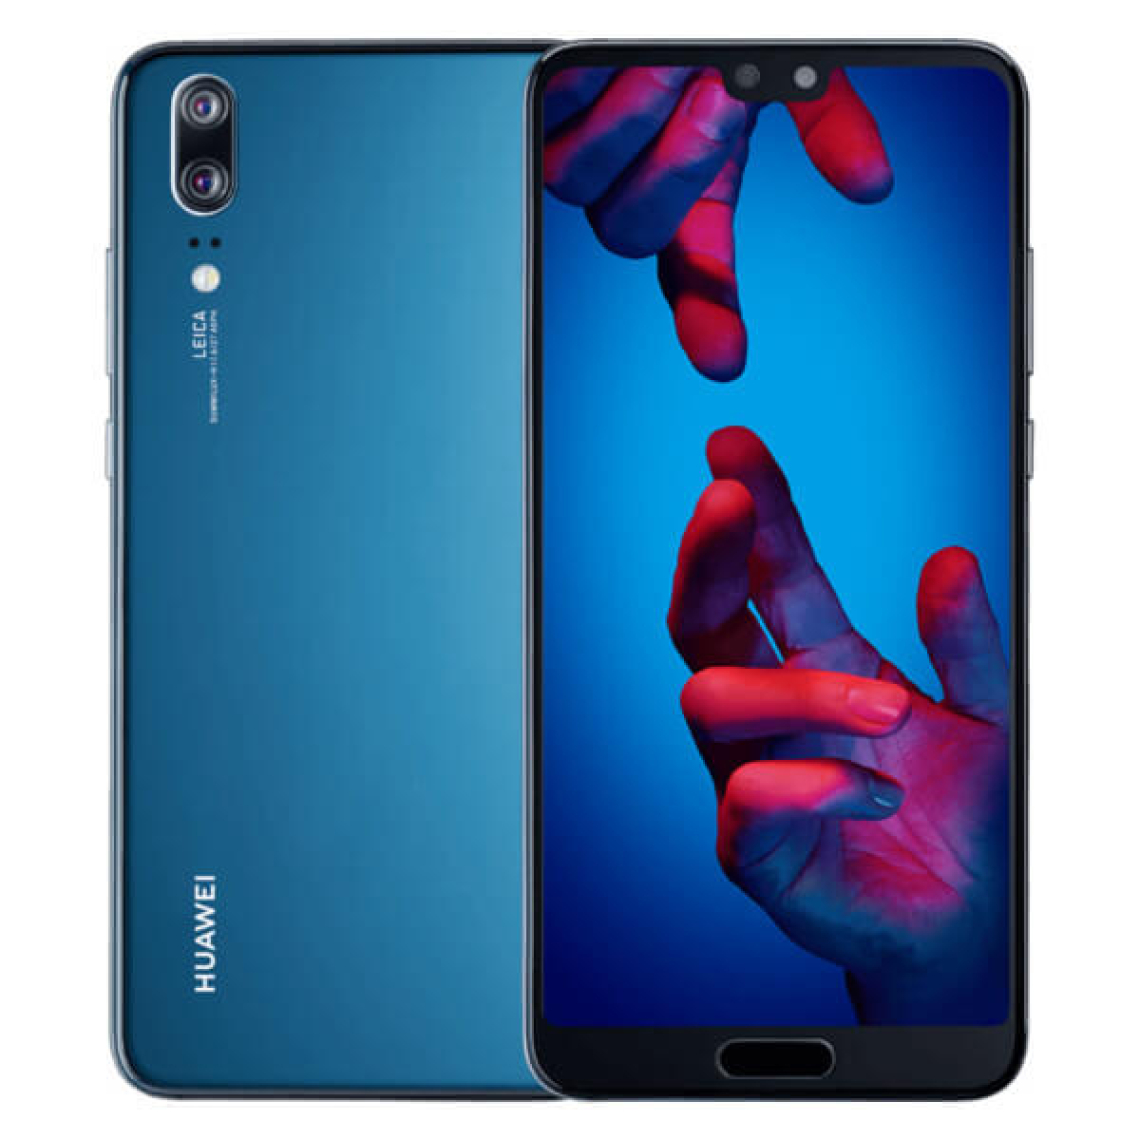 Huawei - Huawei P20 64Go Bleu Double SIM - Smartphone Android